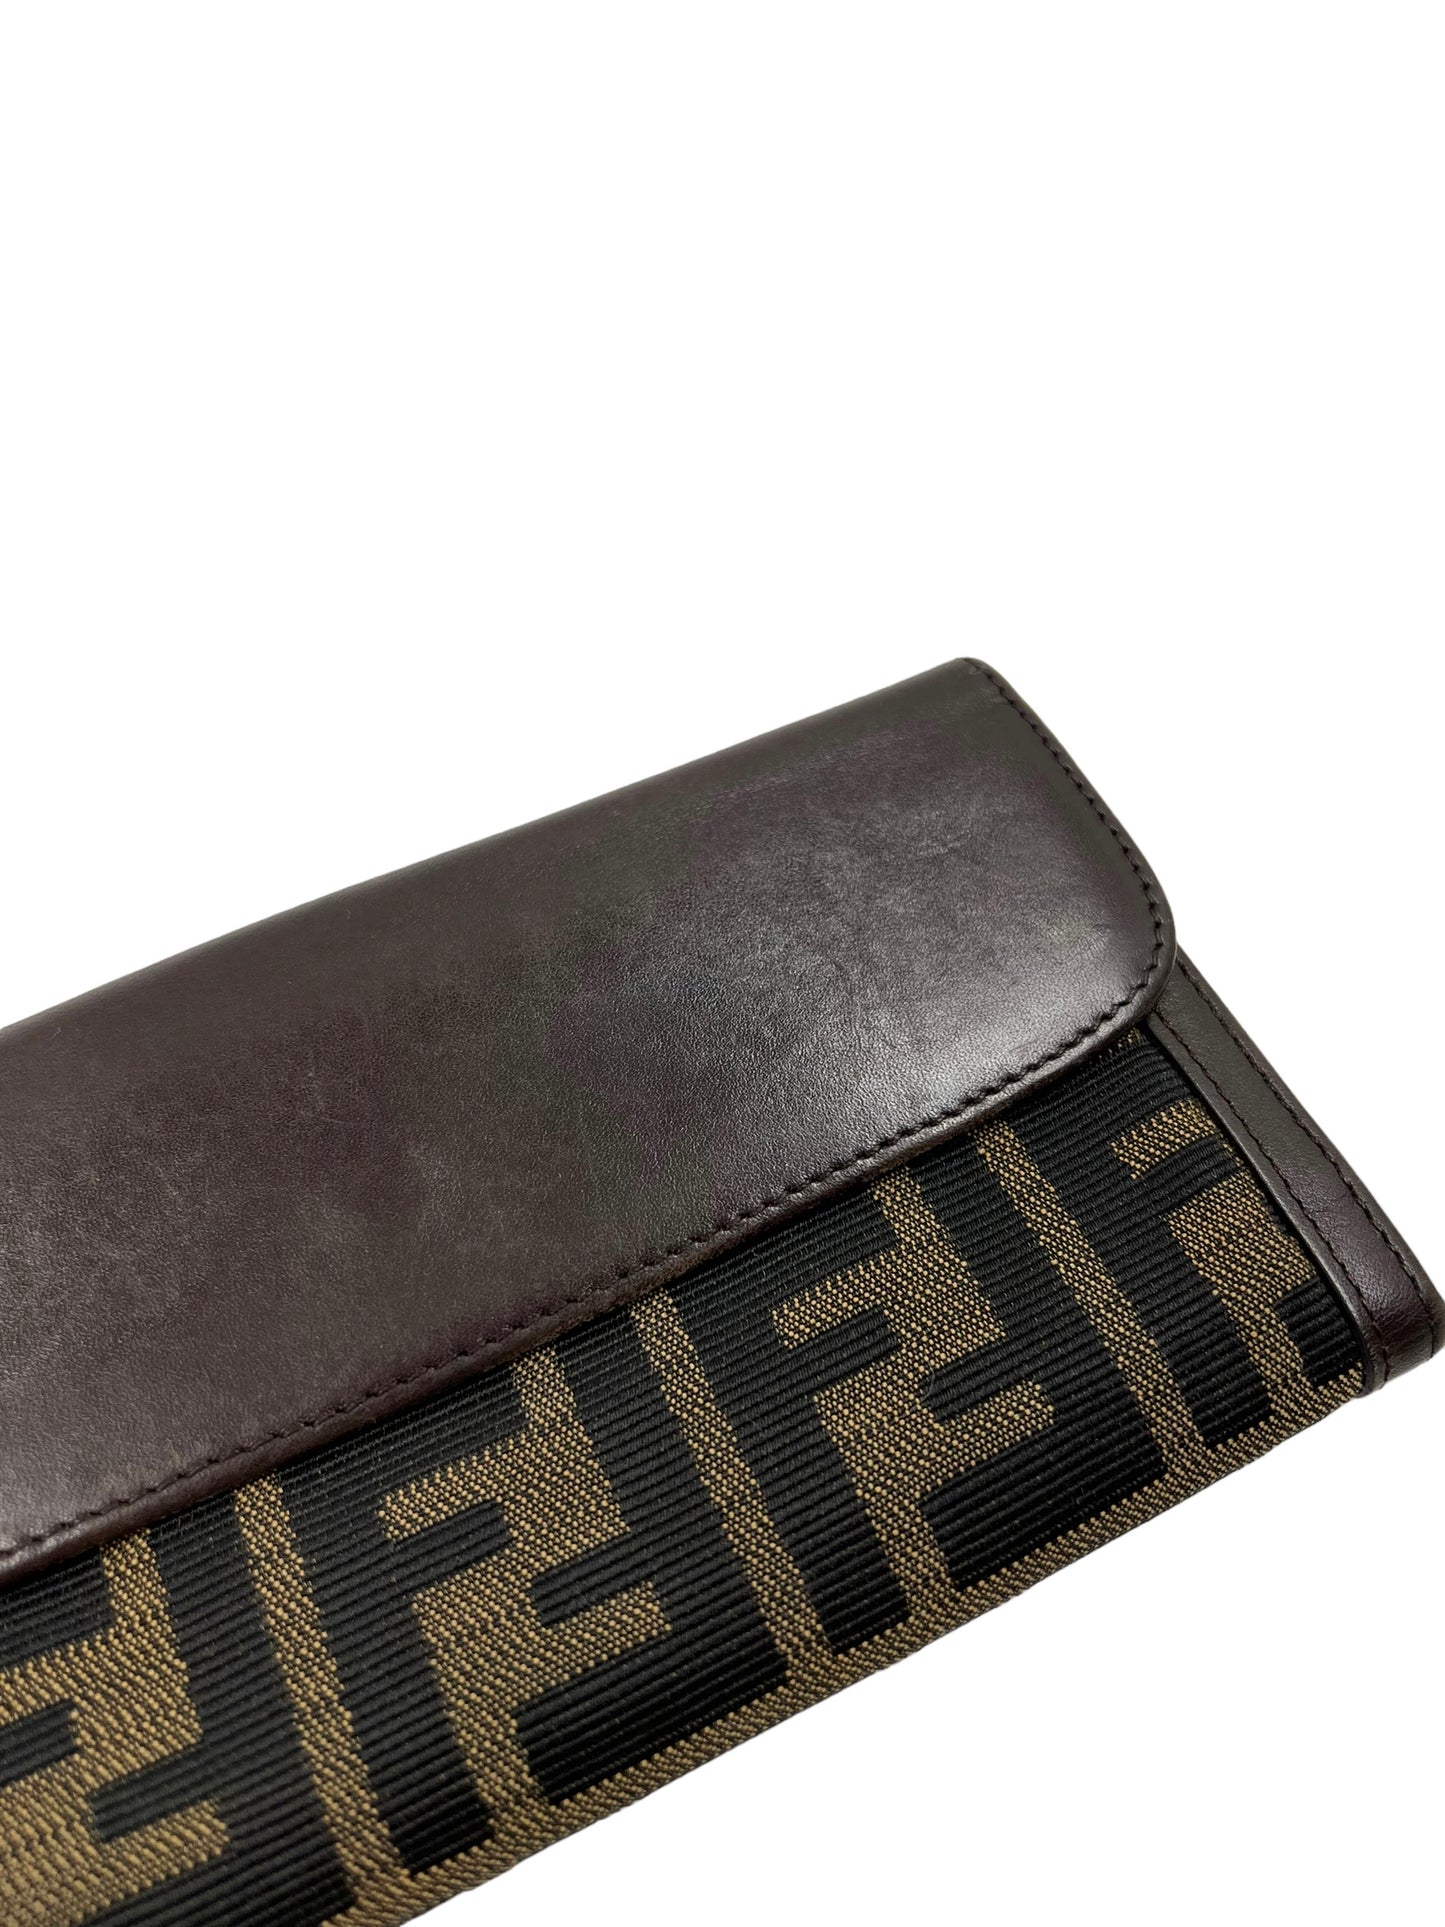 Fendi Zucca Print Canvas Leather Front Flap Wallet